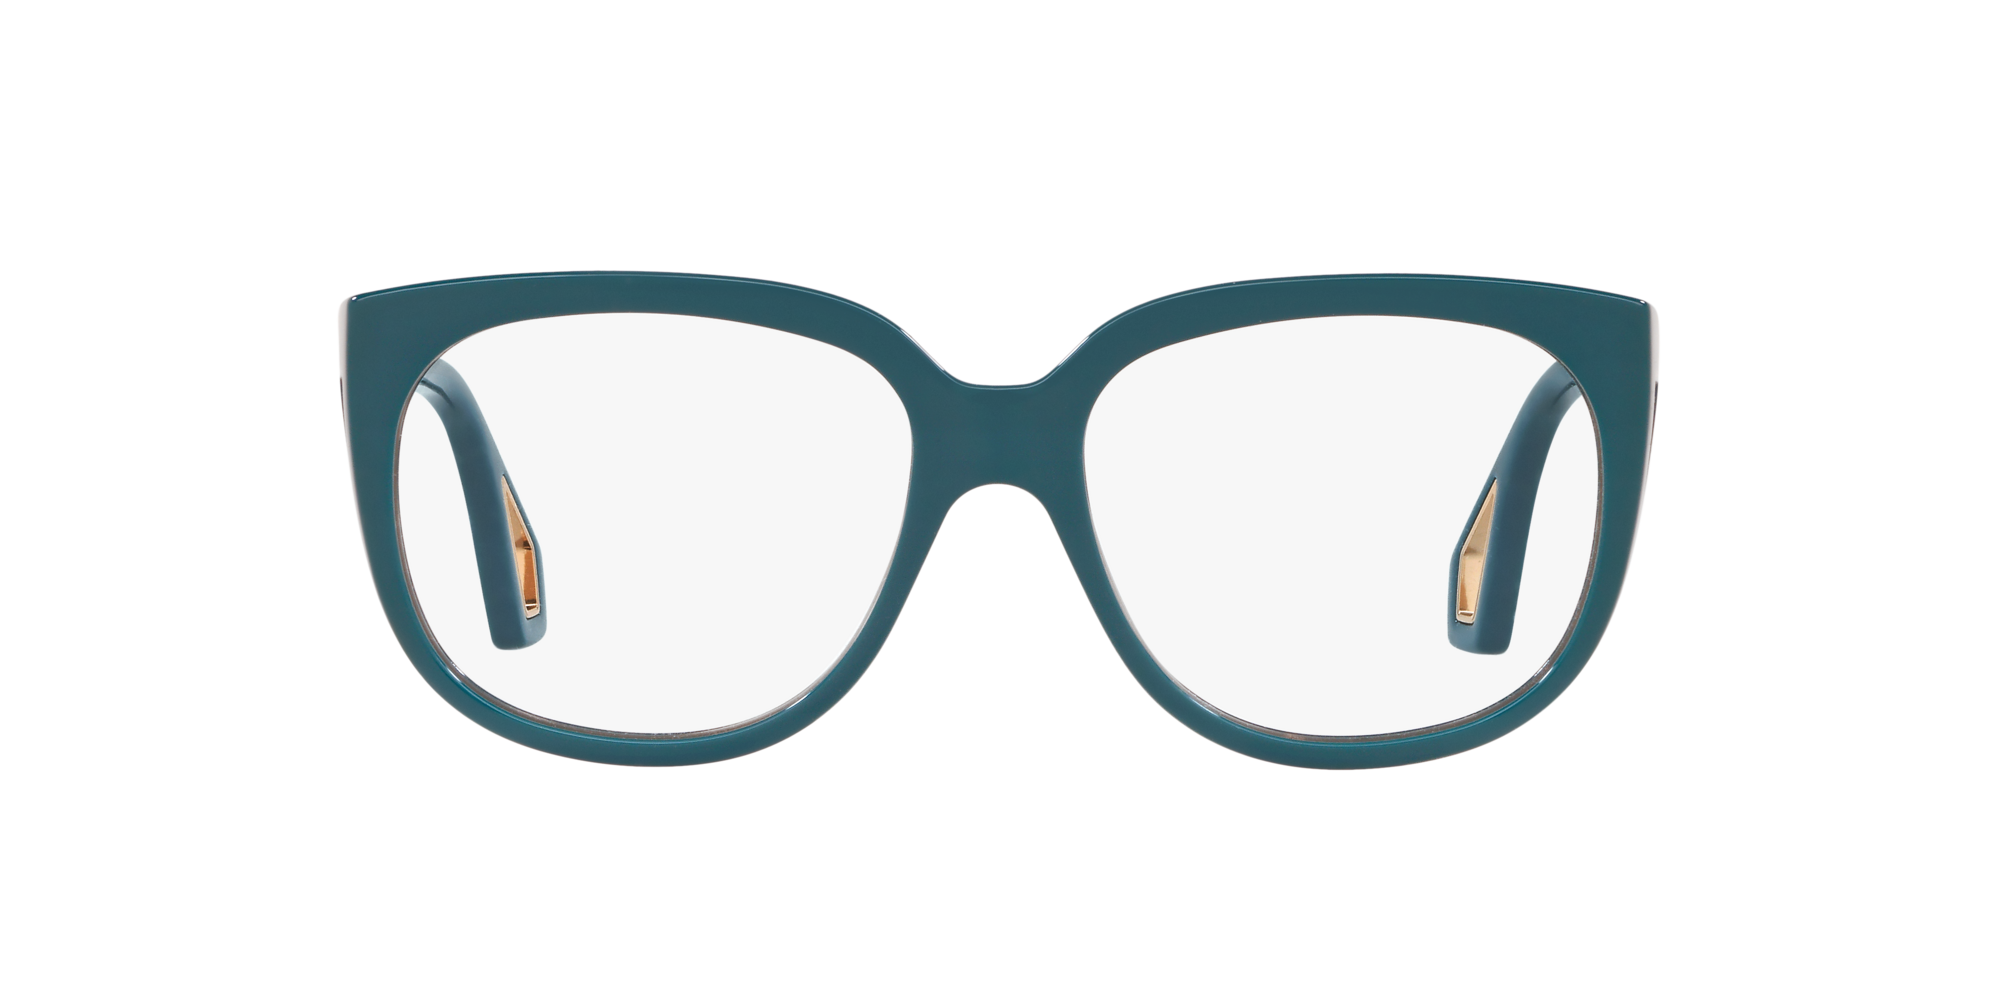 gucci blue frame sunglasses